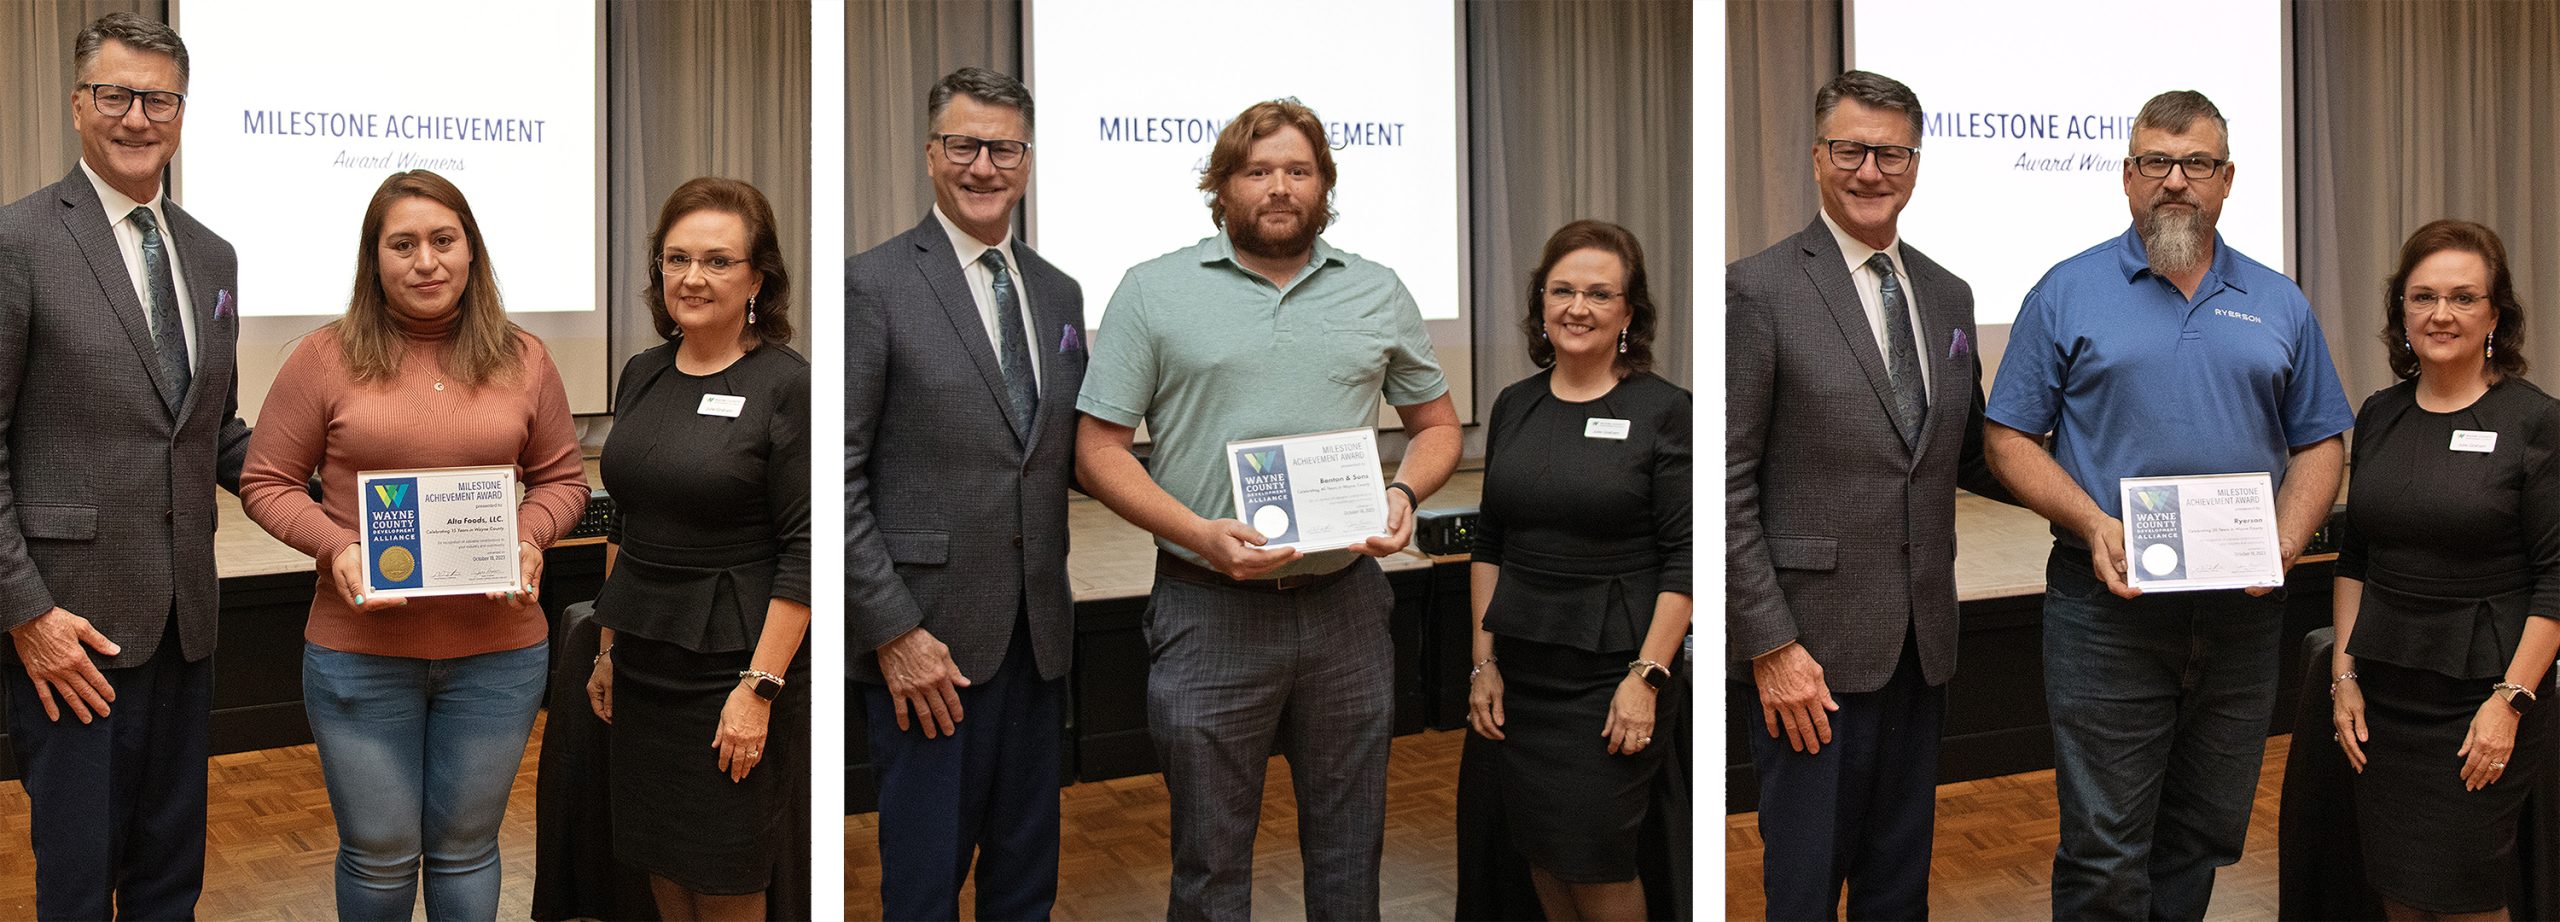 Wayne County Development Alliance Announces Milestone Achievement Award Winners